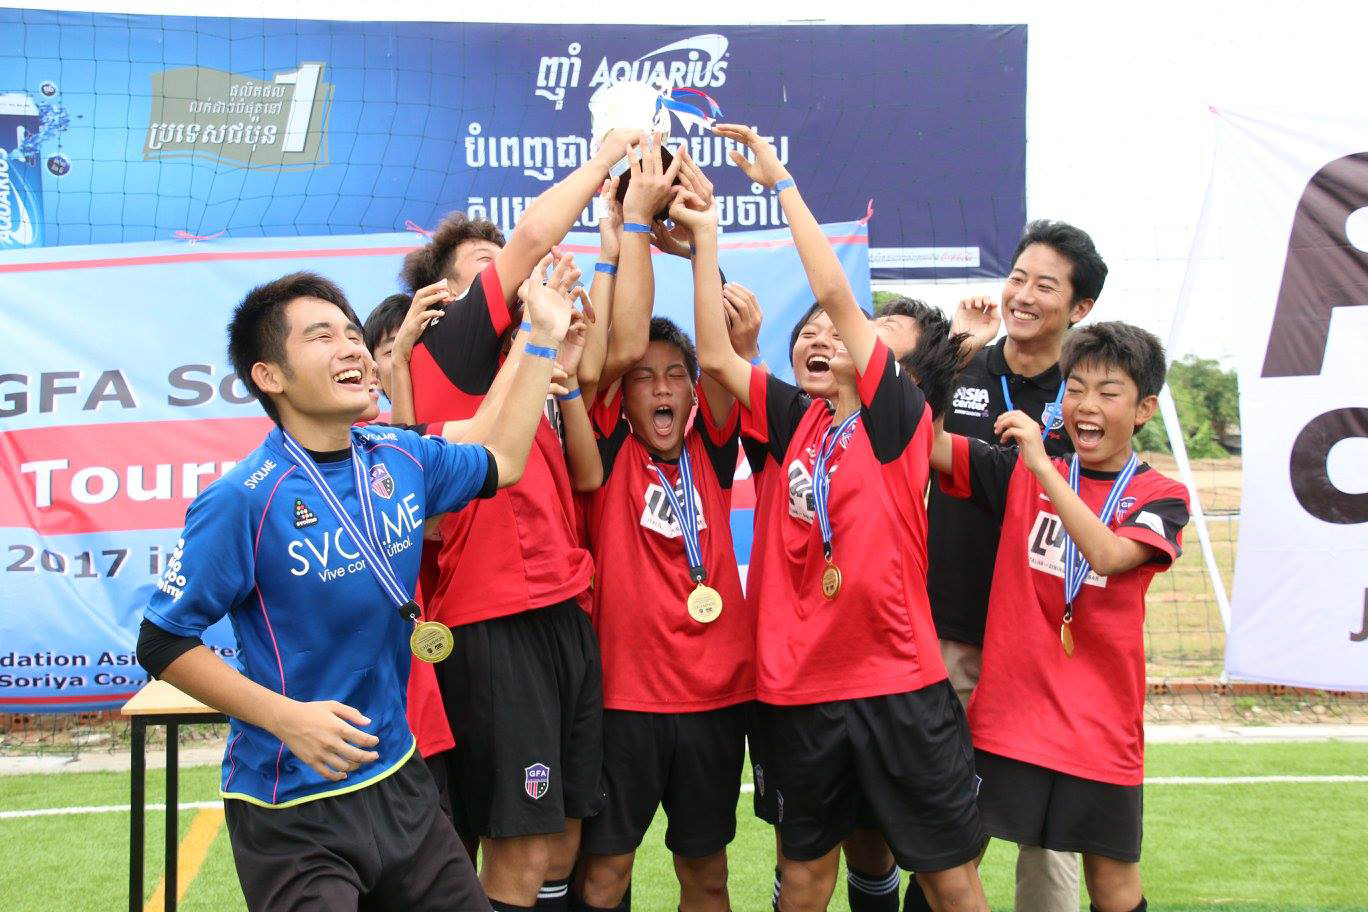 Champion: GFA A (Singapore)